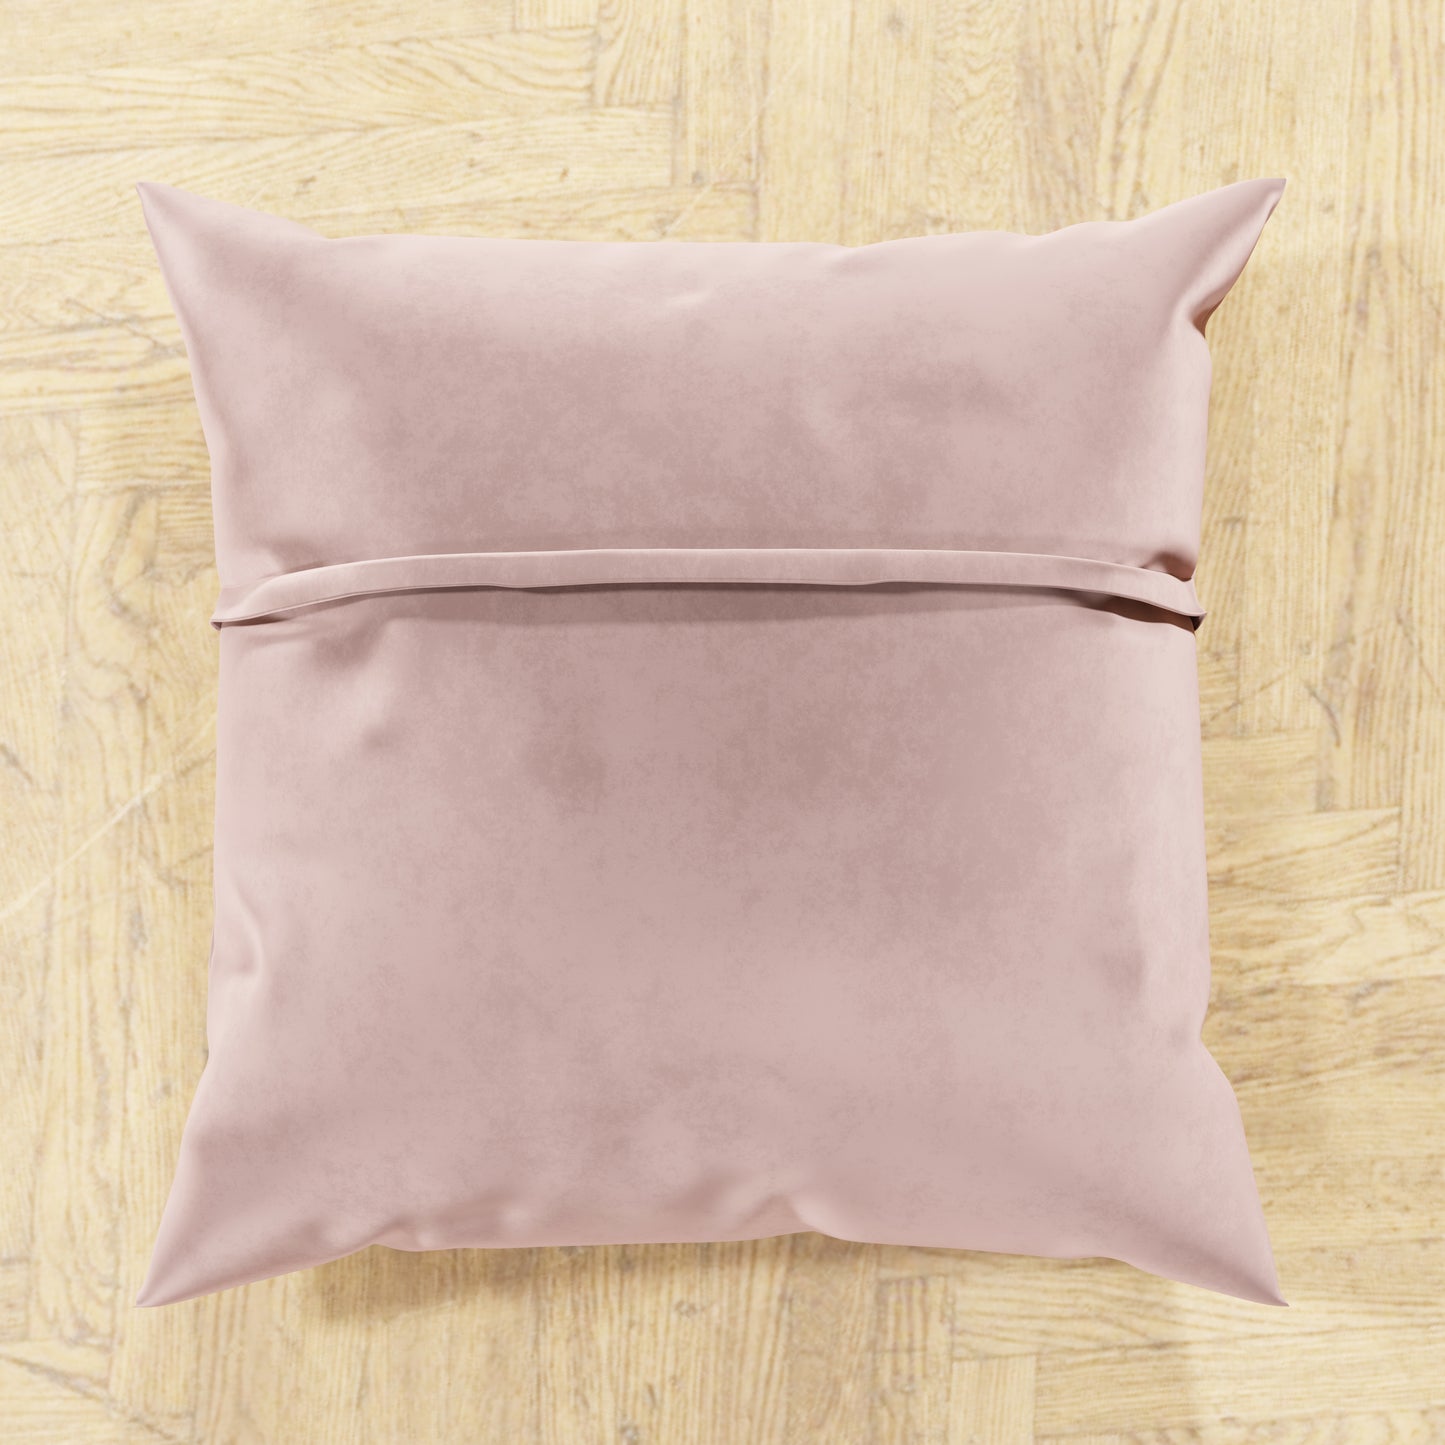 Velvet Cushions, Sofa Cushion Covers, Furnishing Cushions 2pcs